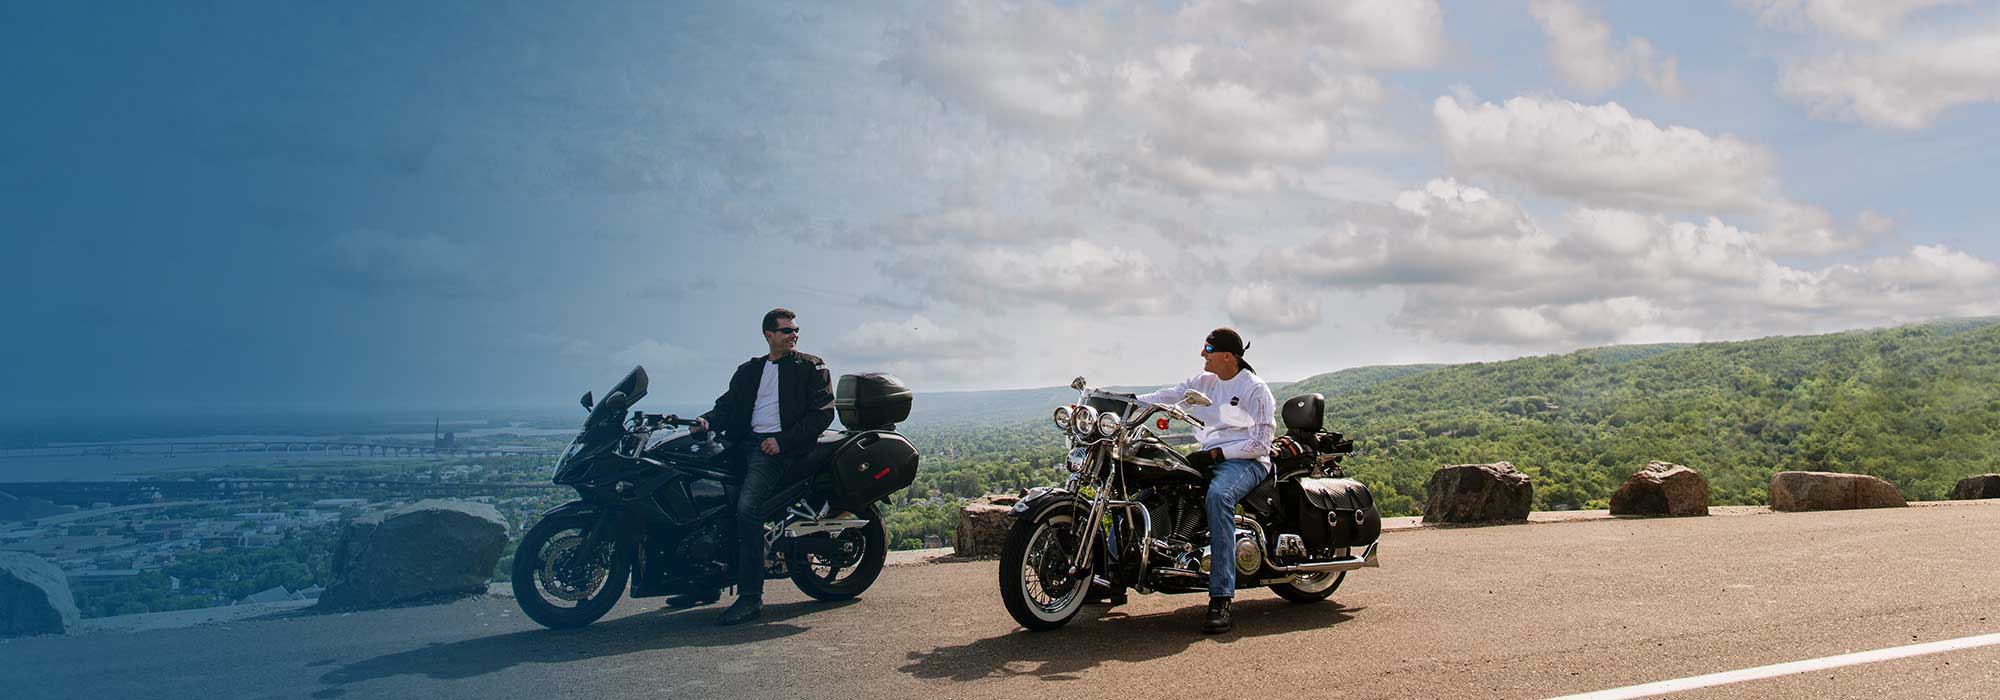 Rick and Gabe riding motorcycles